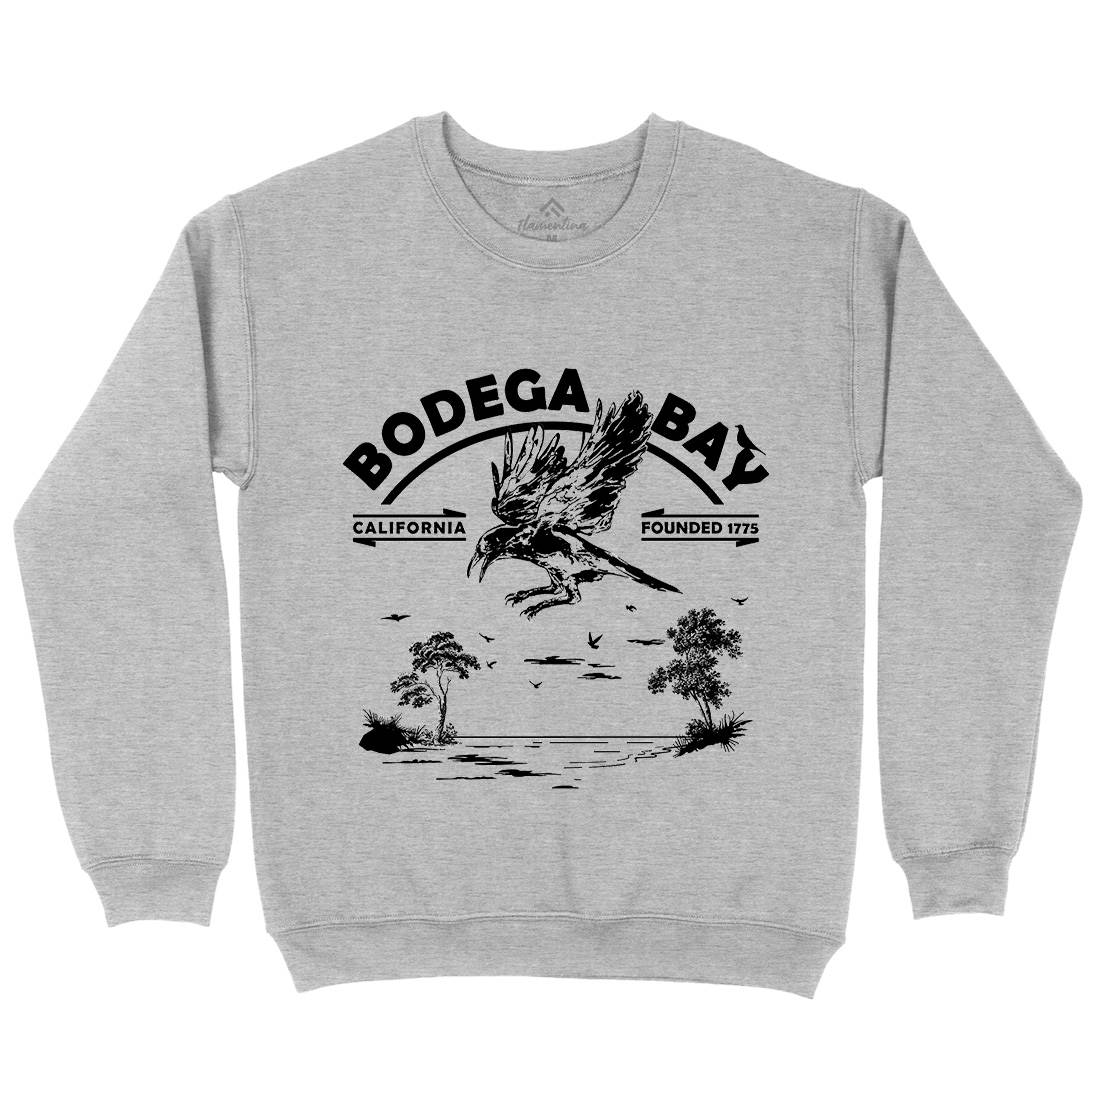 Bodega Bay Kids Crew Neck Sweatshirt Horror D310